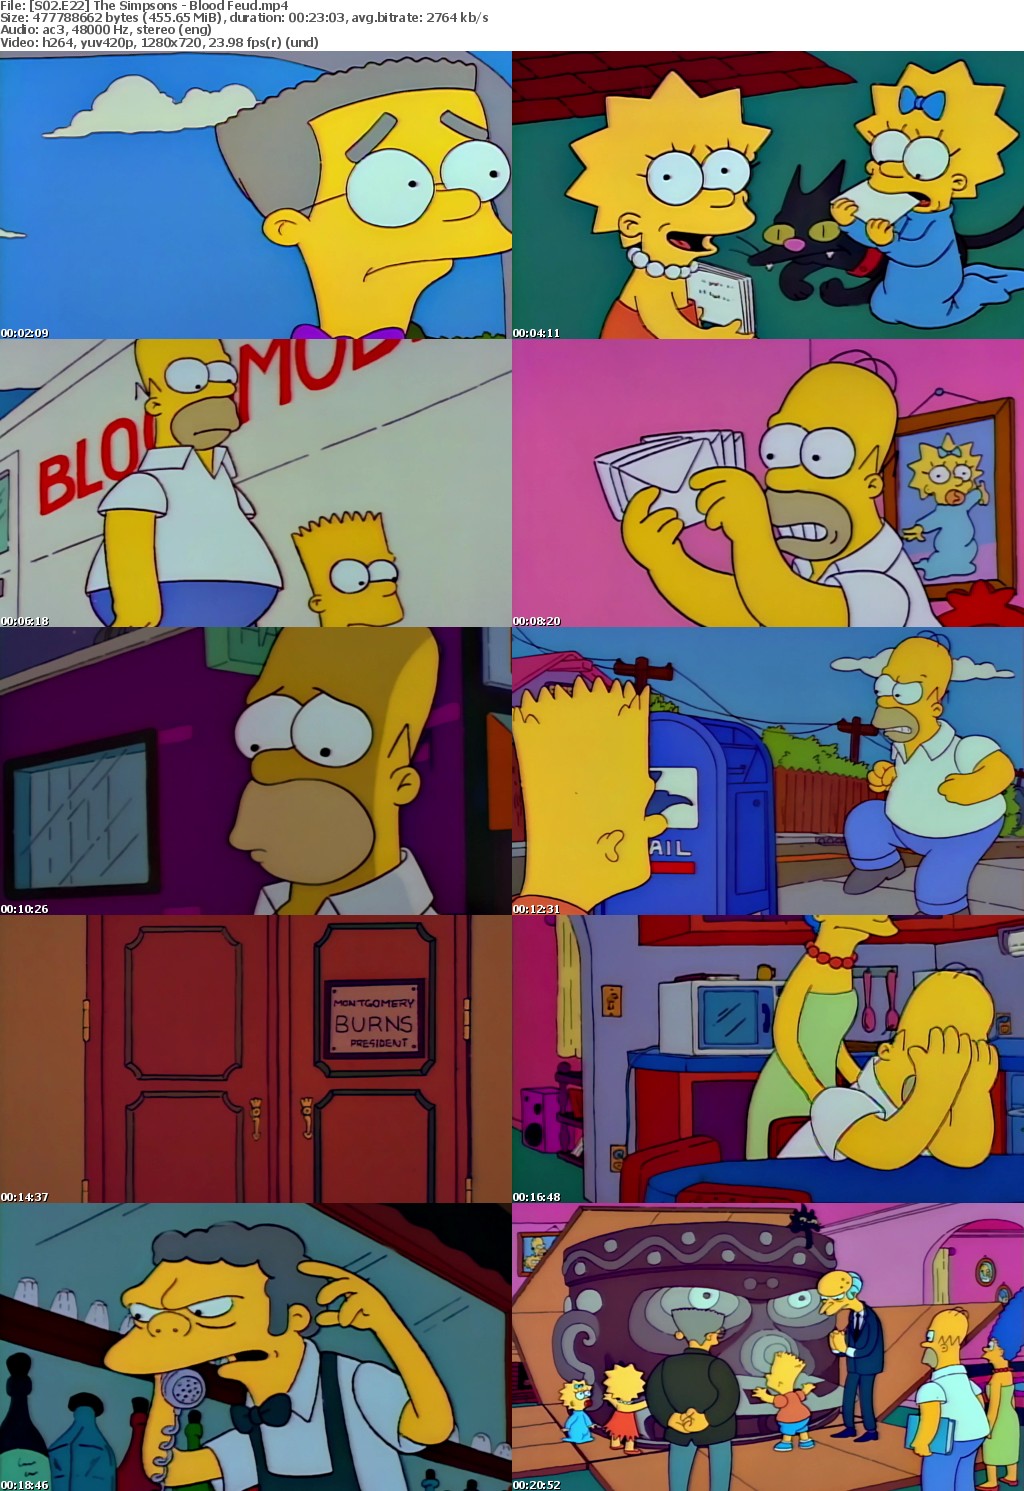 The Simpsons S2 E22 Blood Feud MP4 720p H264 WEBRip EzzRips